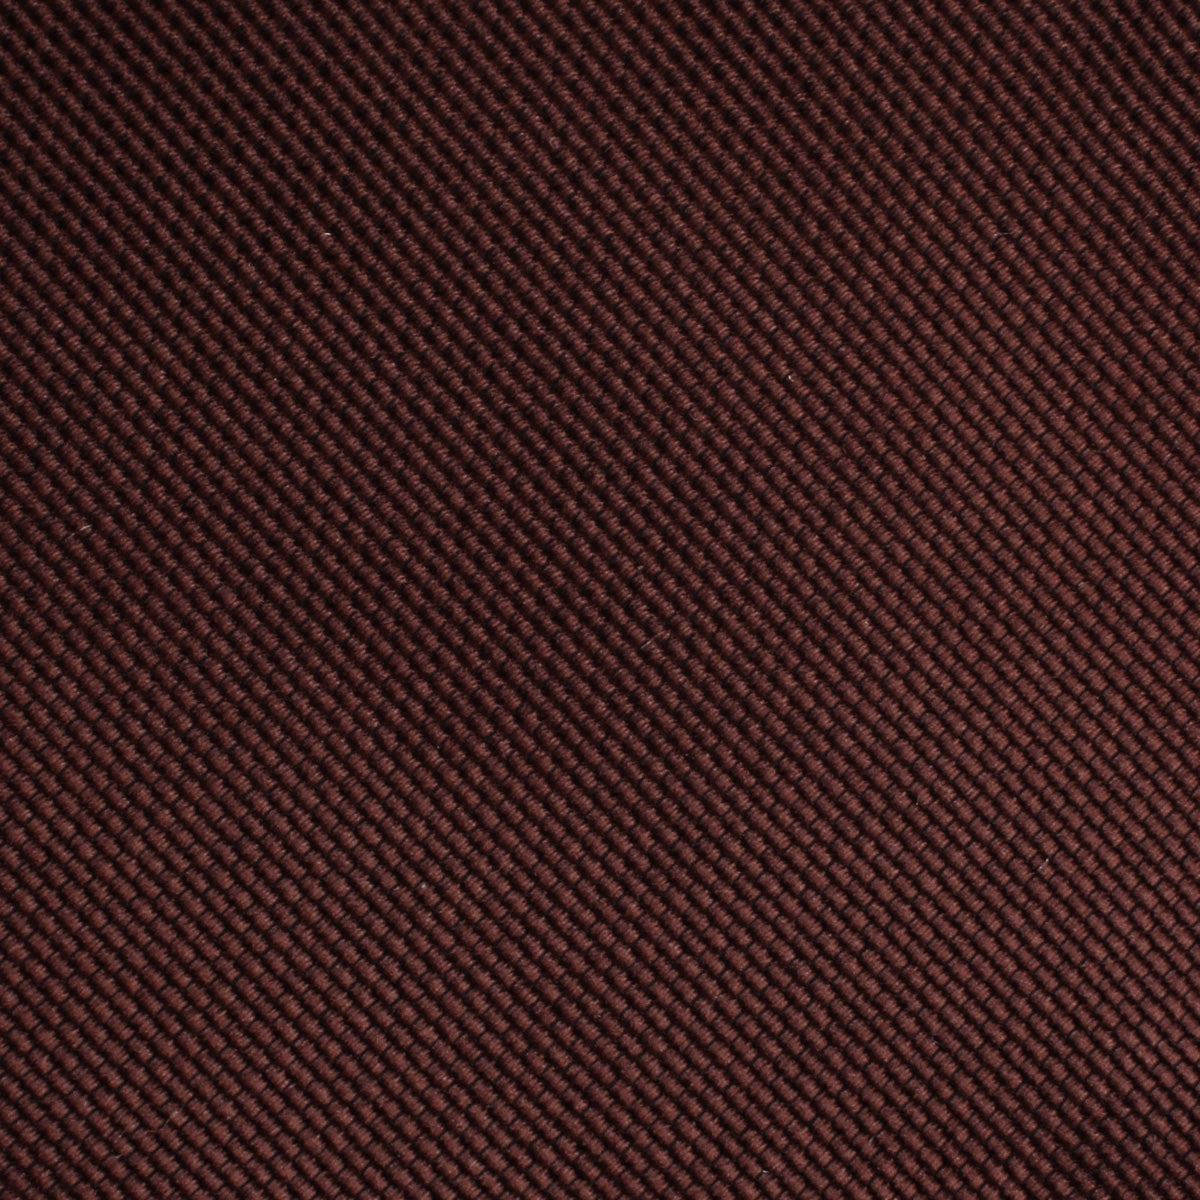 Dark Brown Weave Pocket Square Fabric